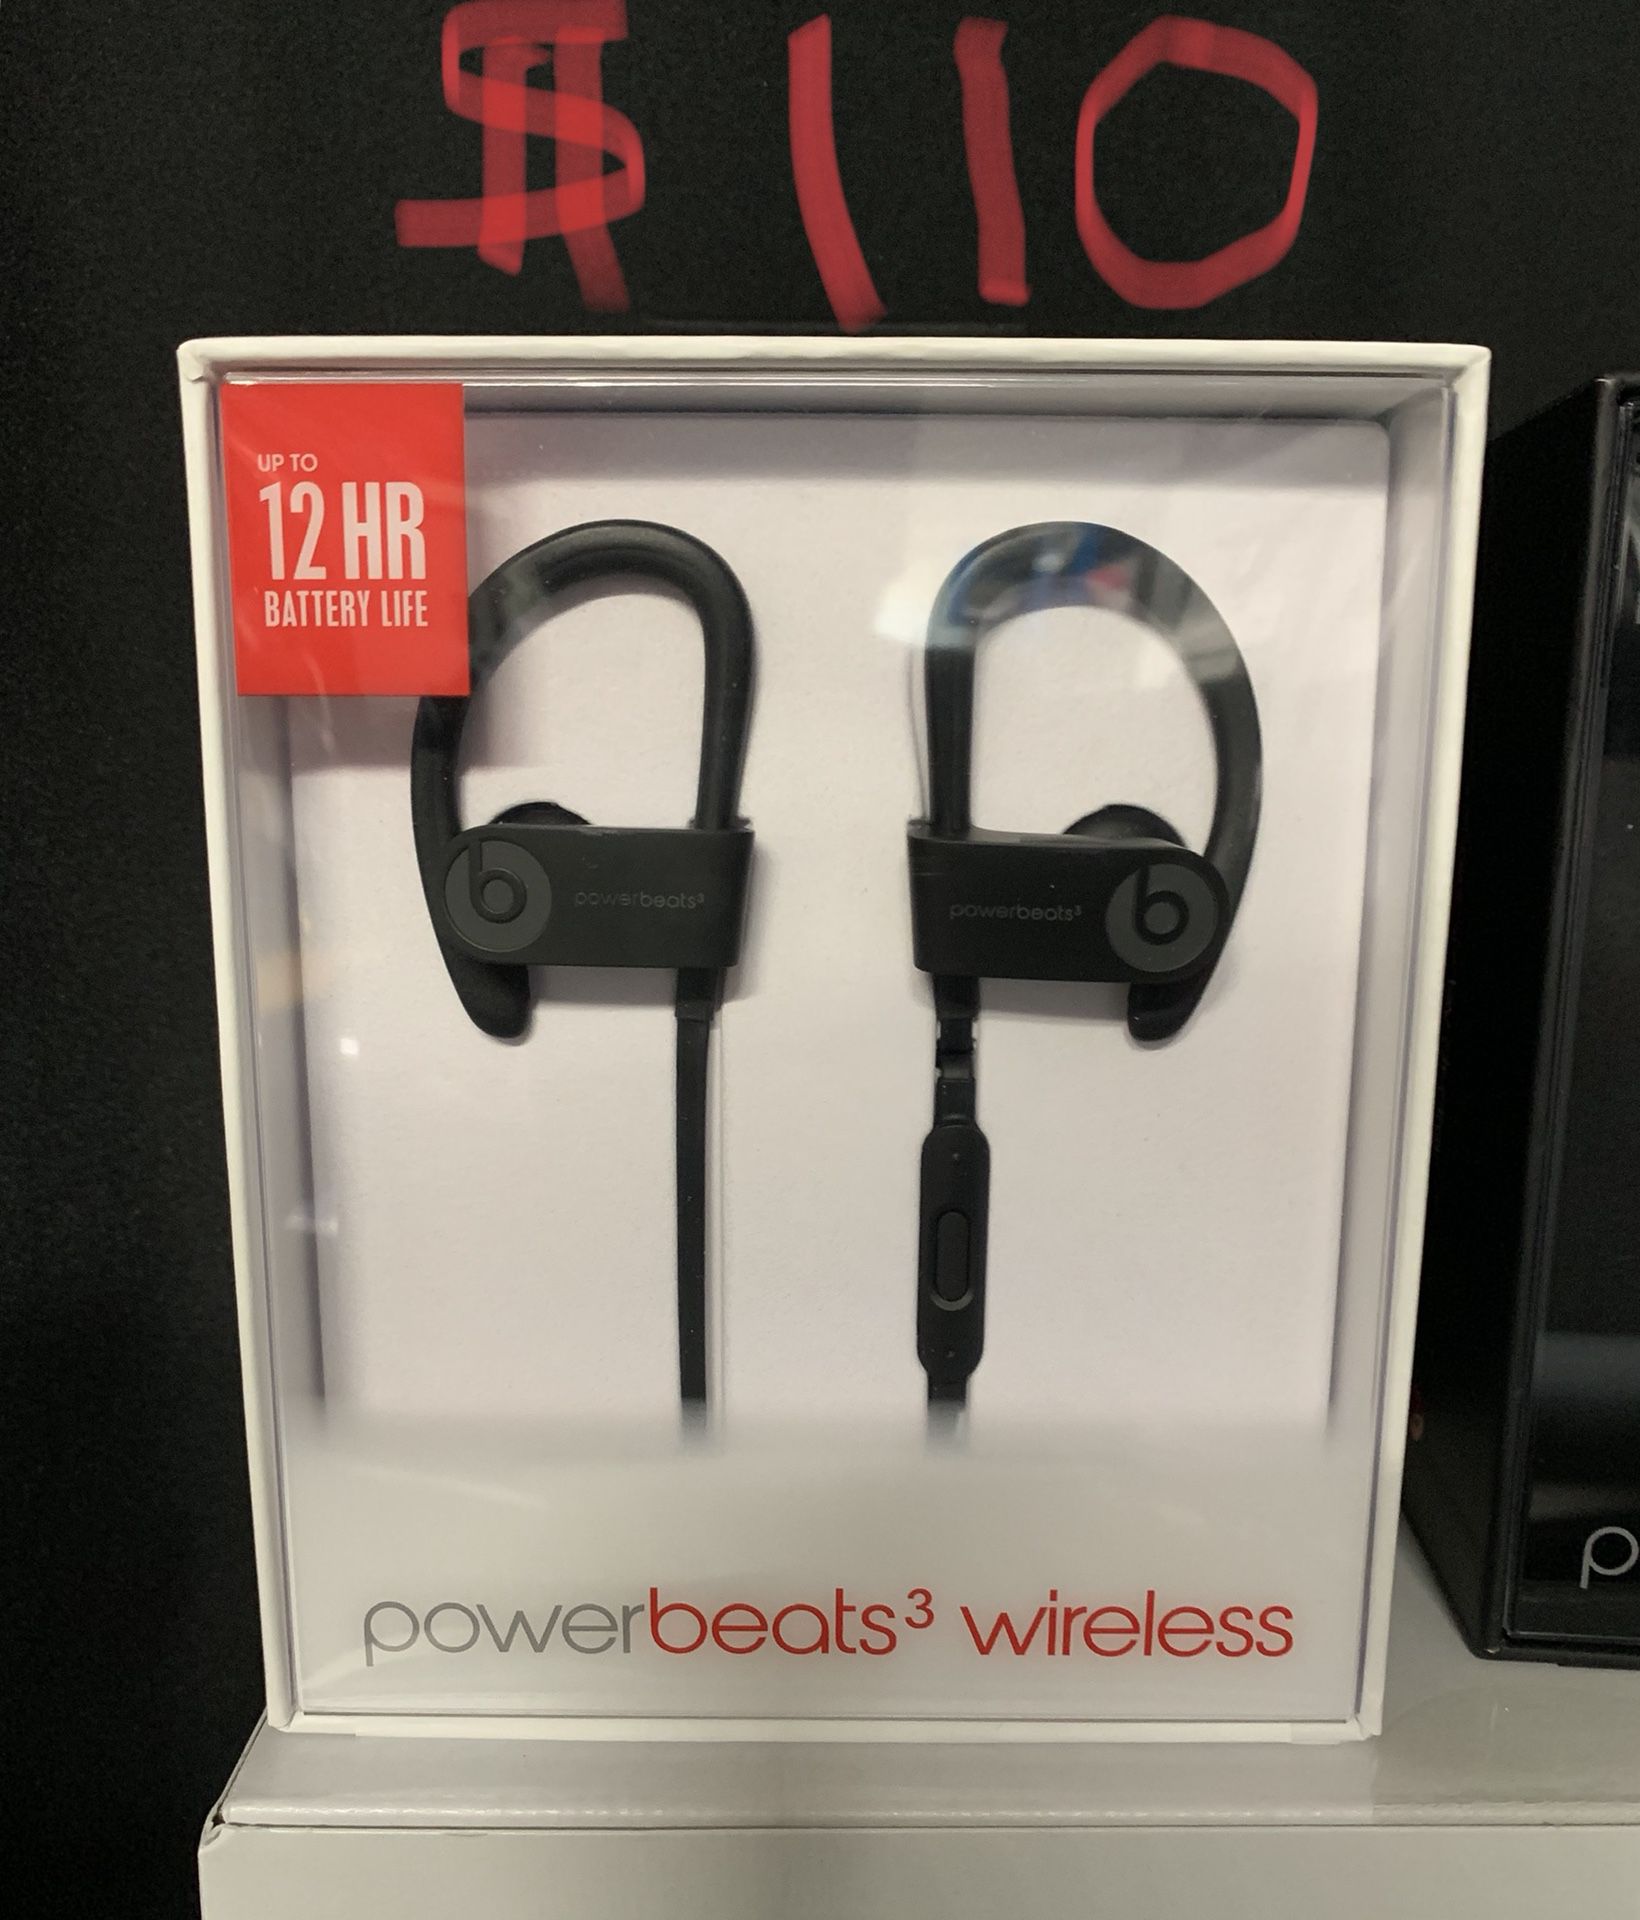 PowerBeats3 Wireless earphones